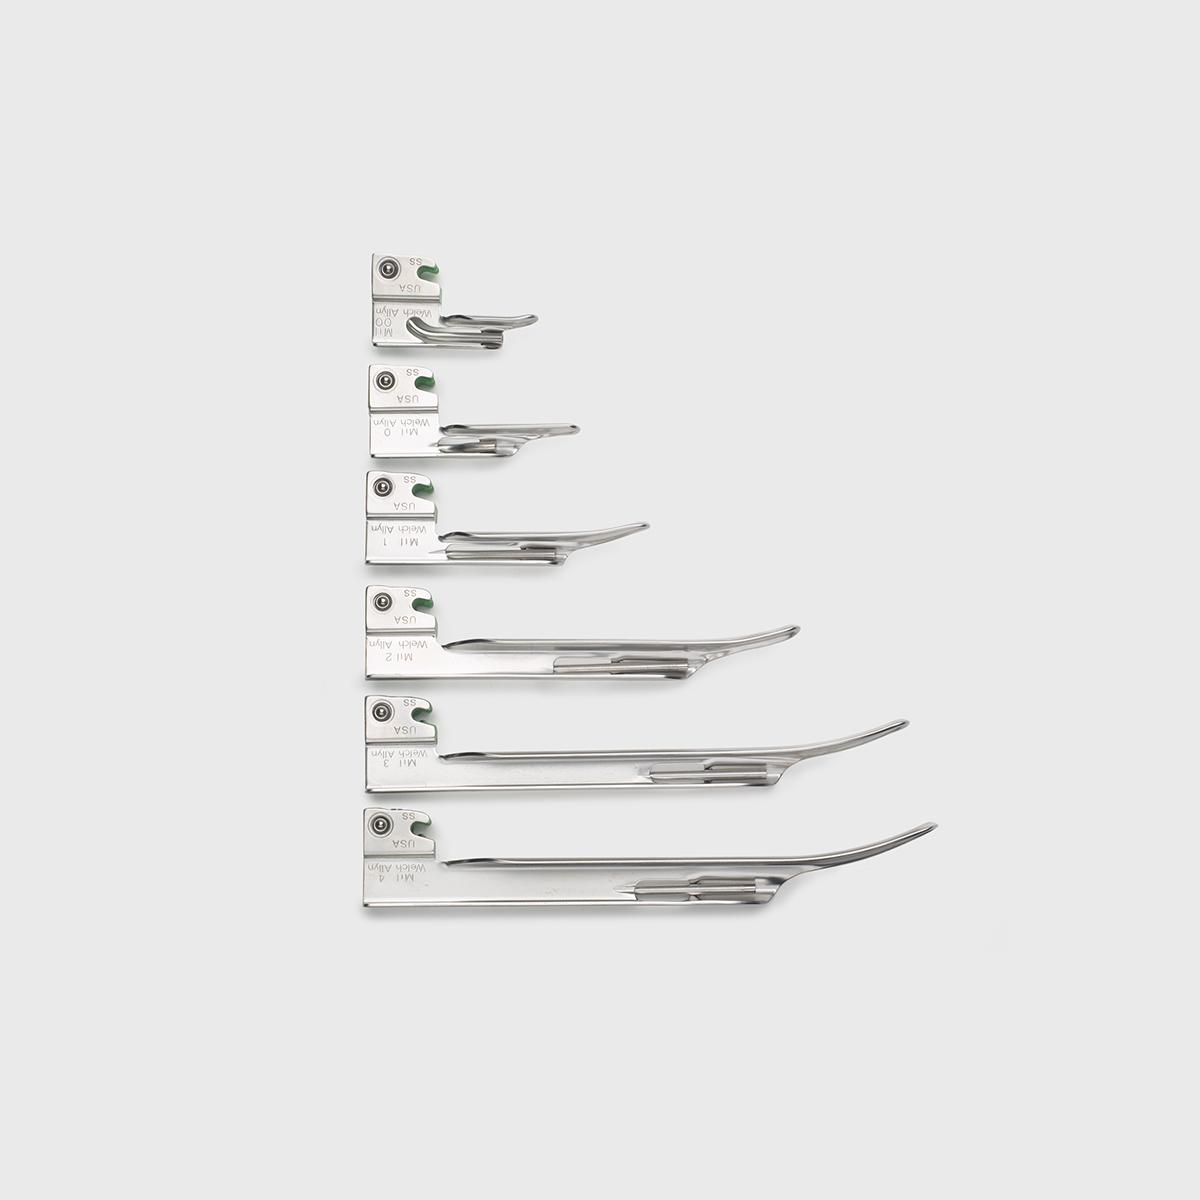 Six Miller Fiber Optic Laryngoscope System blades of various size